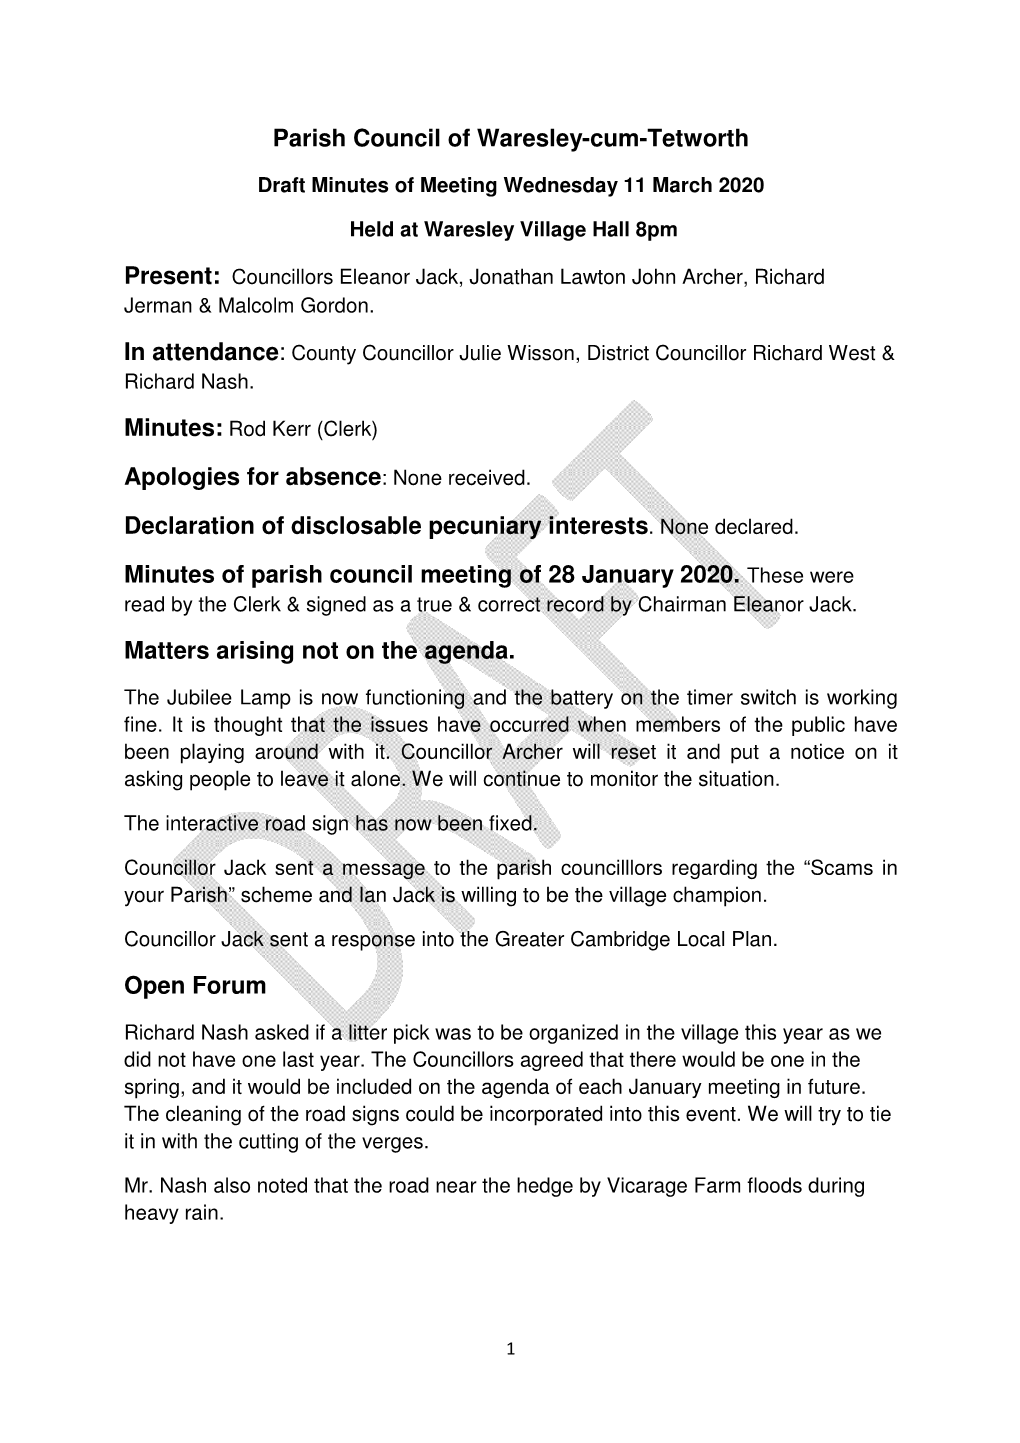 Parish Council of Waresley-Cum-Tetworth Apologies